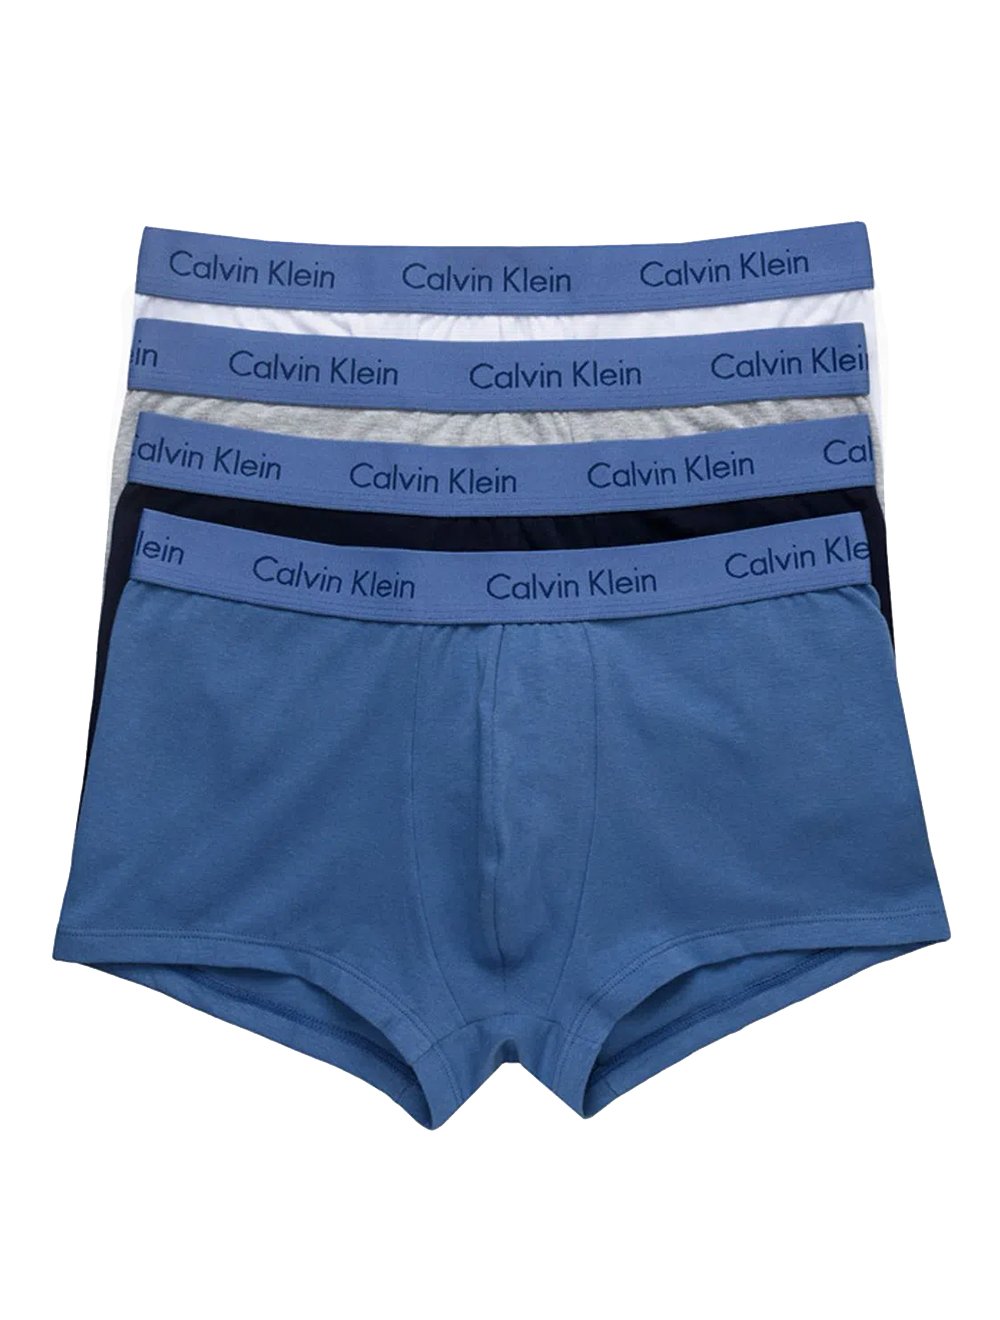 Cuecas Calvin Klein Low Rise Trunk Branca/ Mescla/ Azul/ Marinho Pack 4 UN